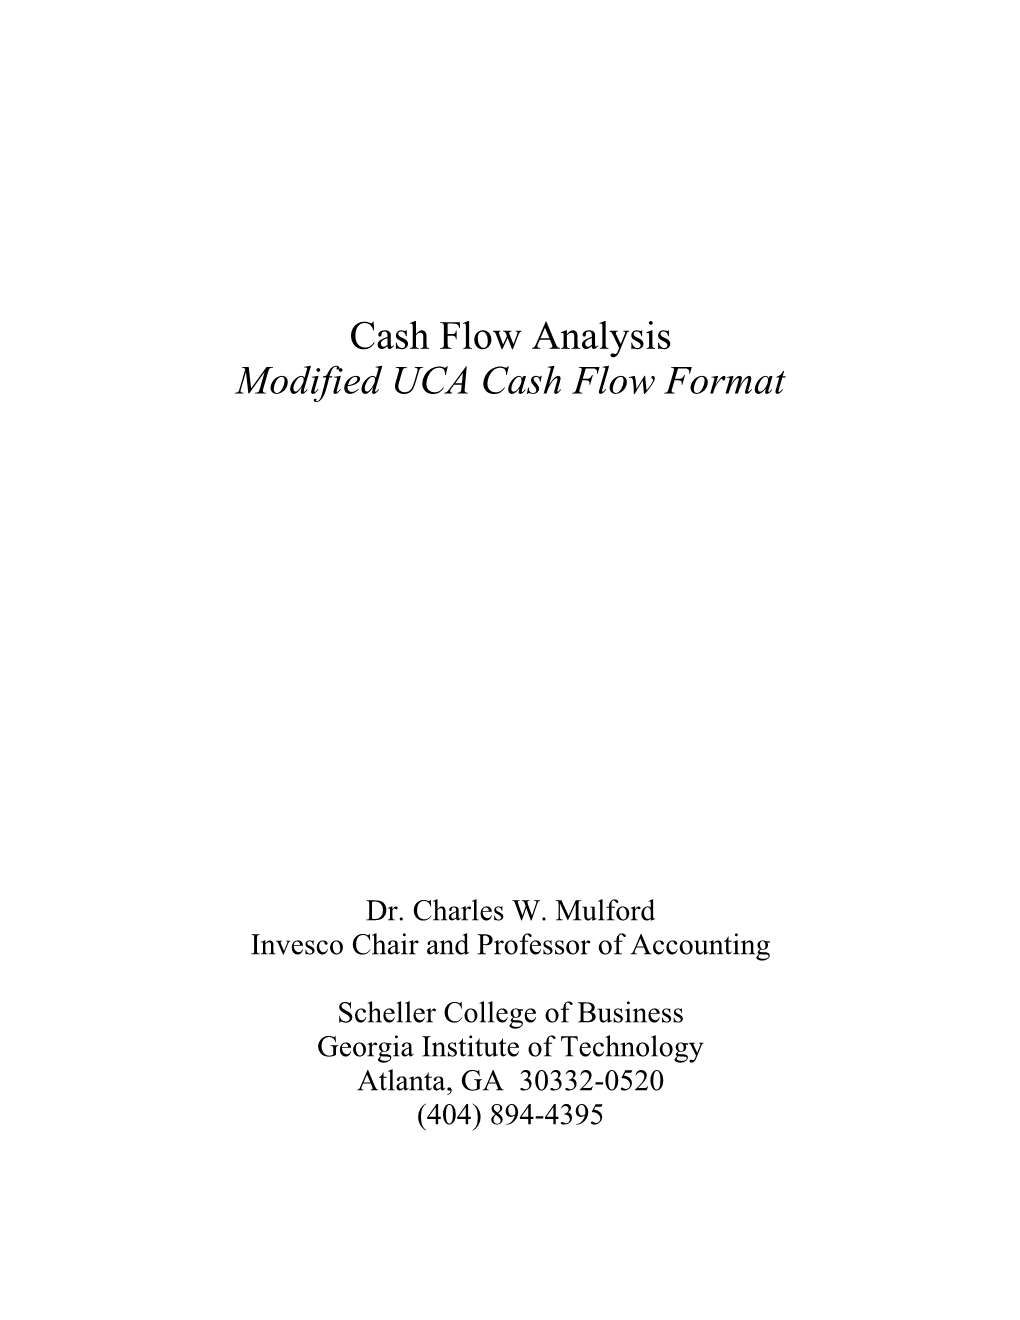 Cash Flow Analysis Modified UCA Cash Flow Format